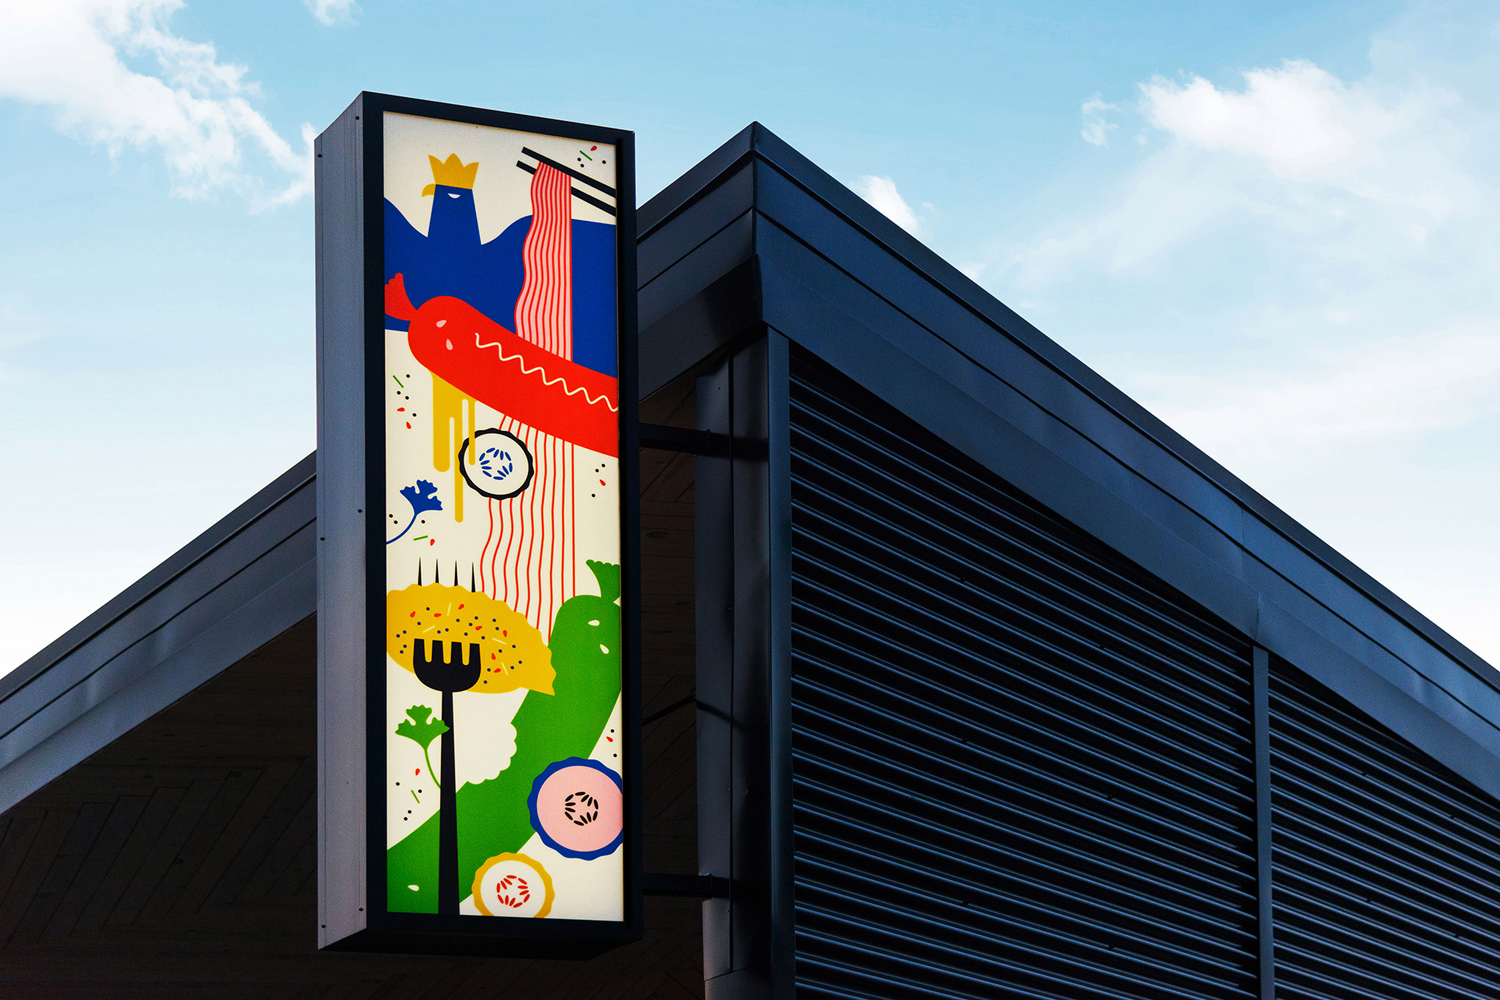 Brand identity and signage by New York studio Franklyn for Chicago’s Korean Polish street food restaurant Kimski